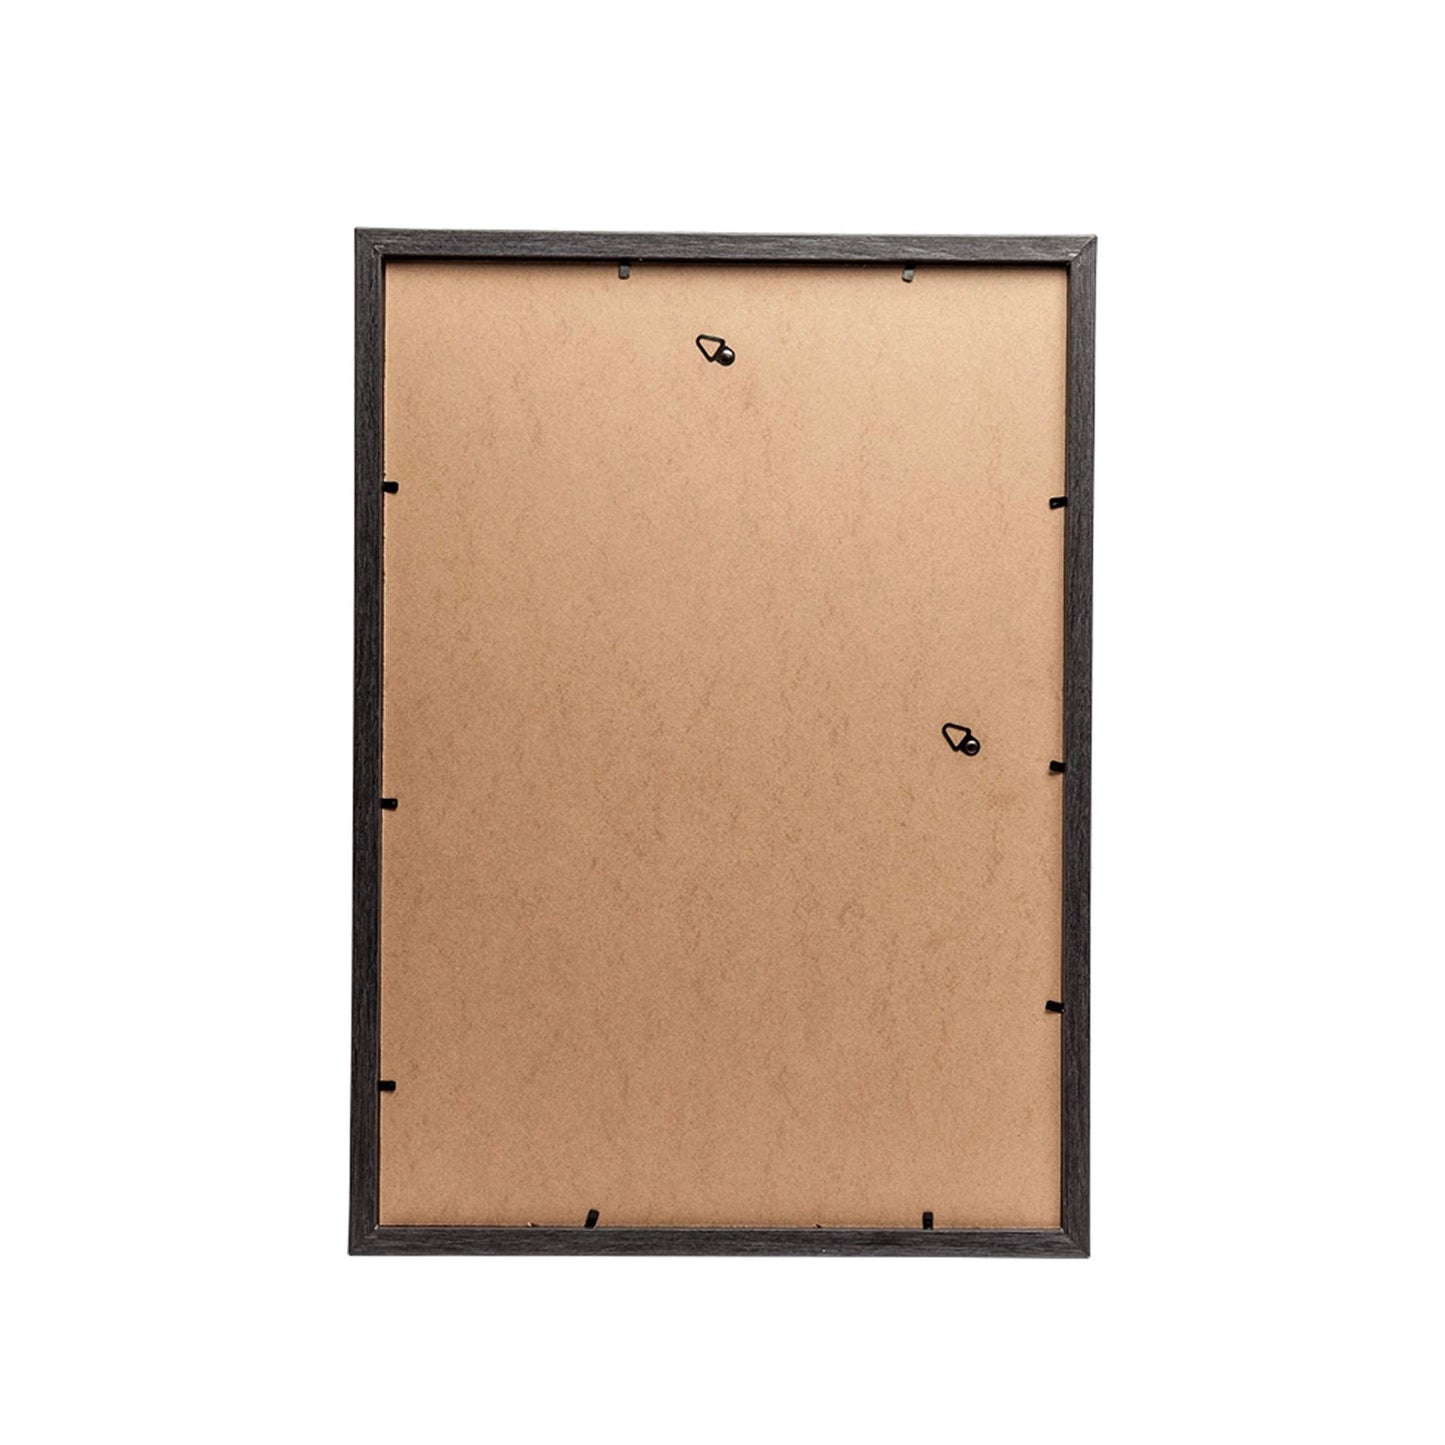 Grey wooden A3 frame